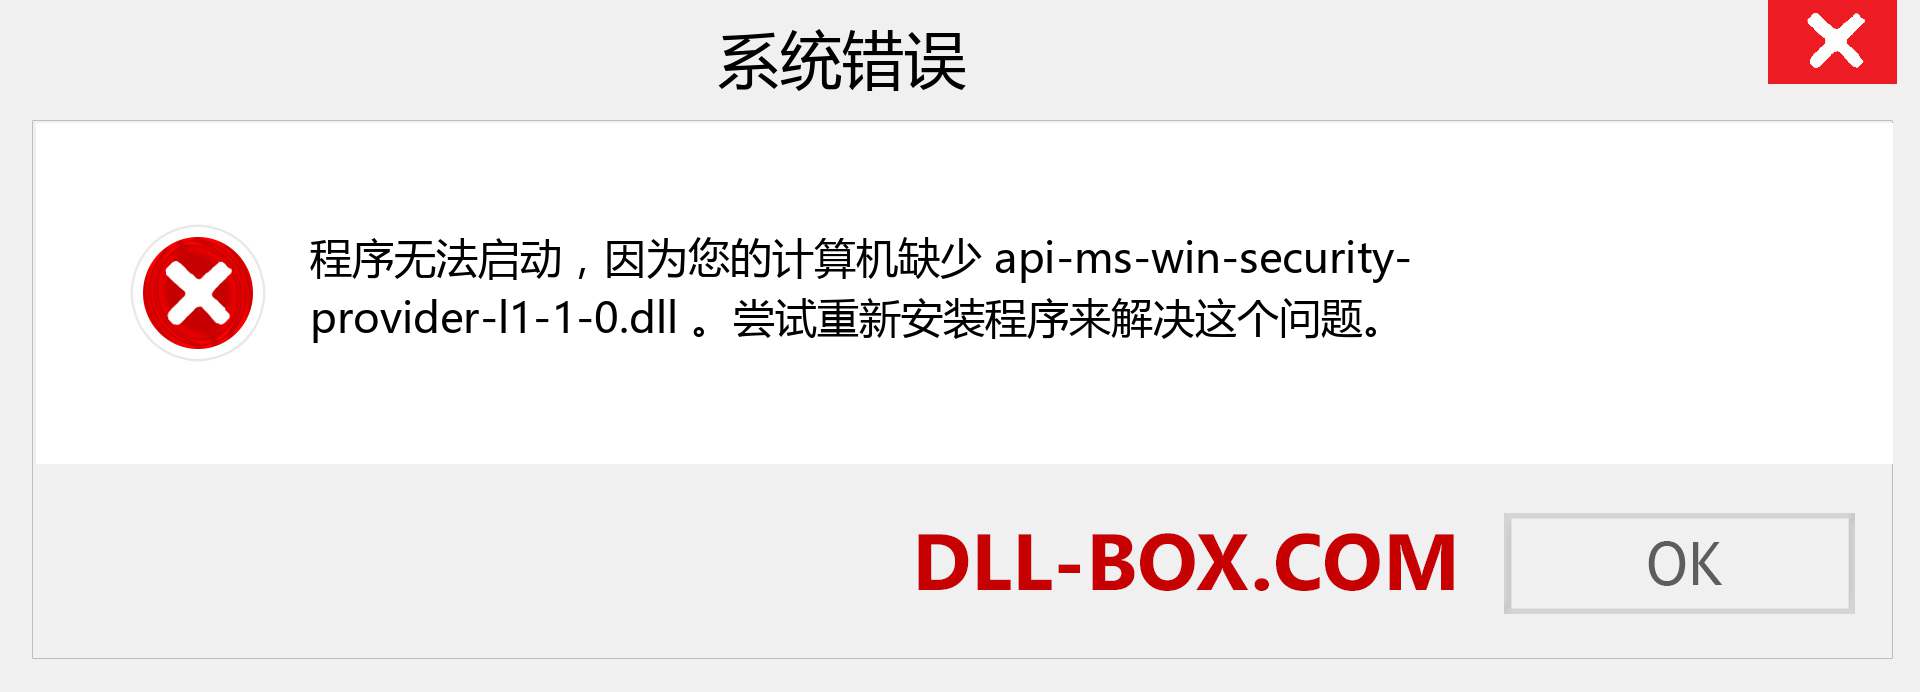 api-ms-win-security-provider-l1-1-0.dll 文件丢失？。 适用于 Windows 7、8、10 的下载 - 修复 Windows、照片、图像上的 api-ms-win-security-provider-l1-1-0 dll 丢失错误